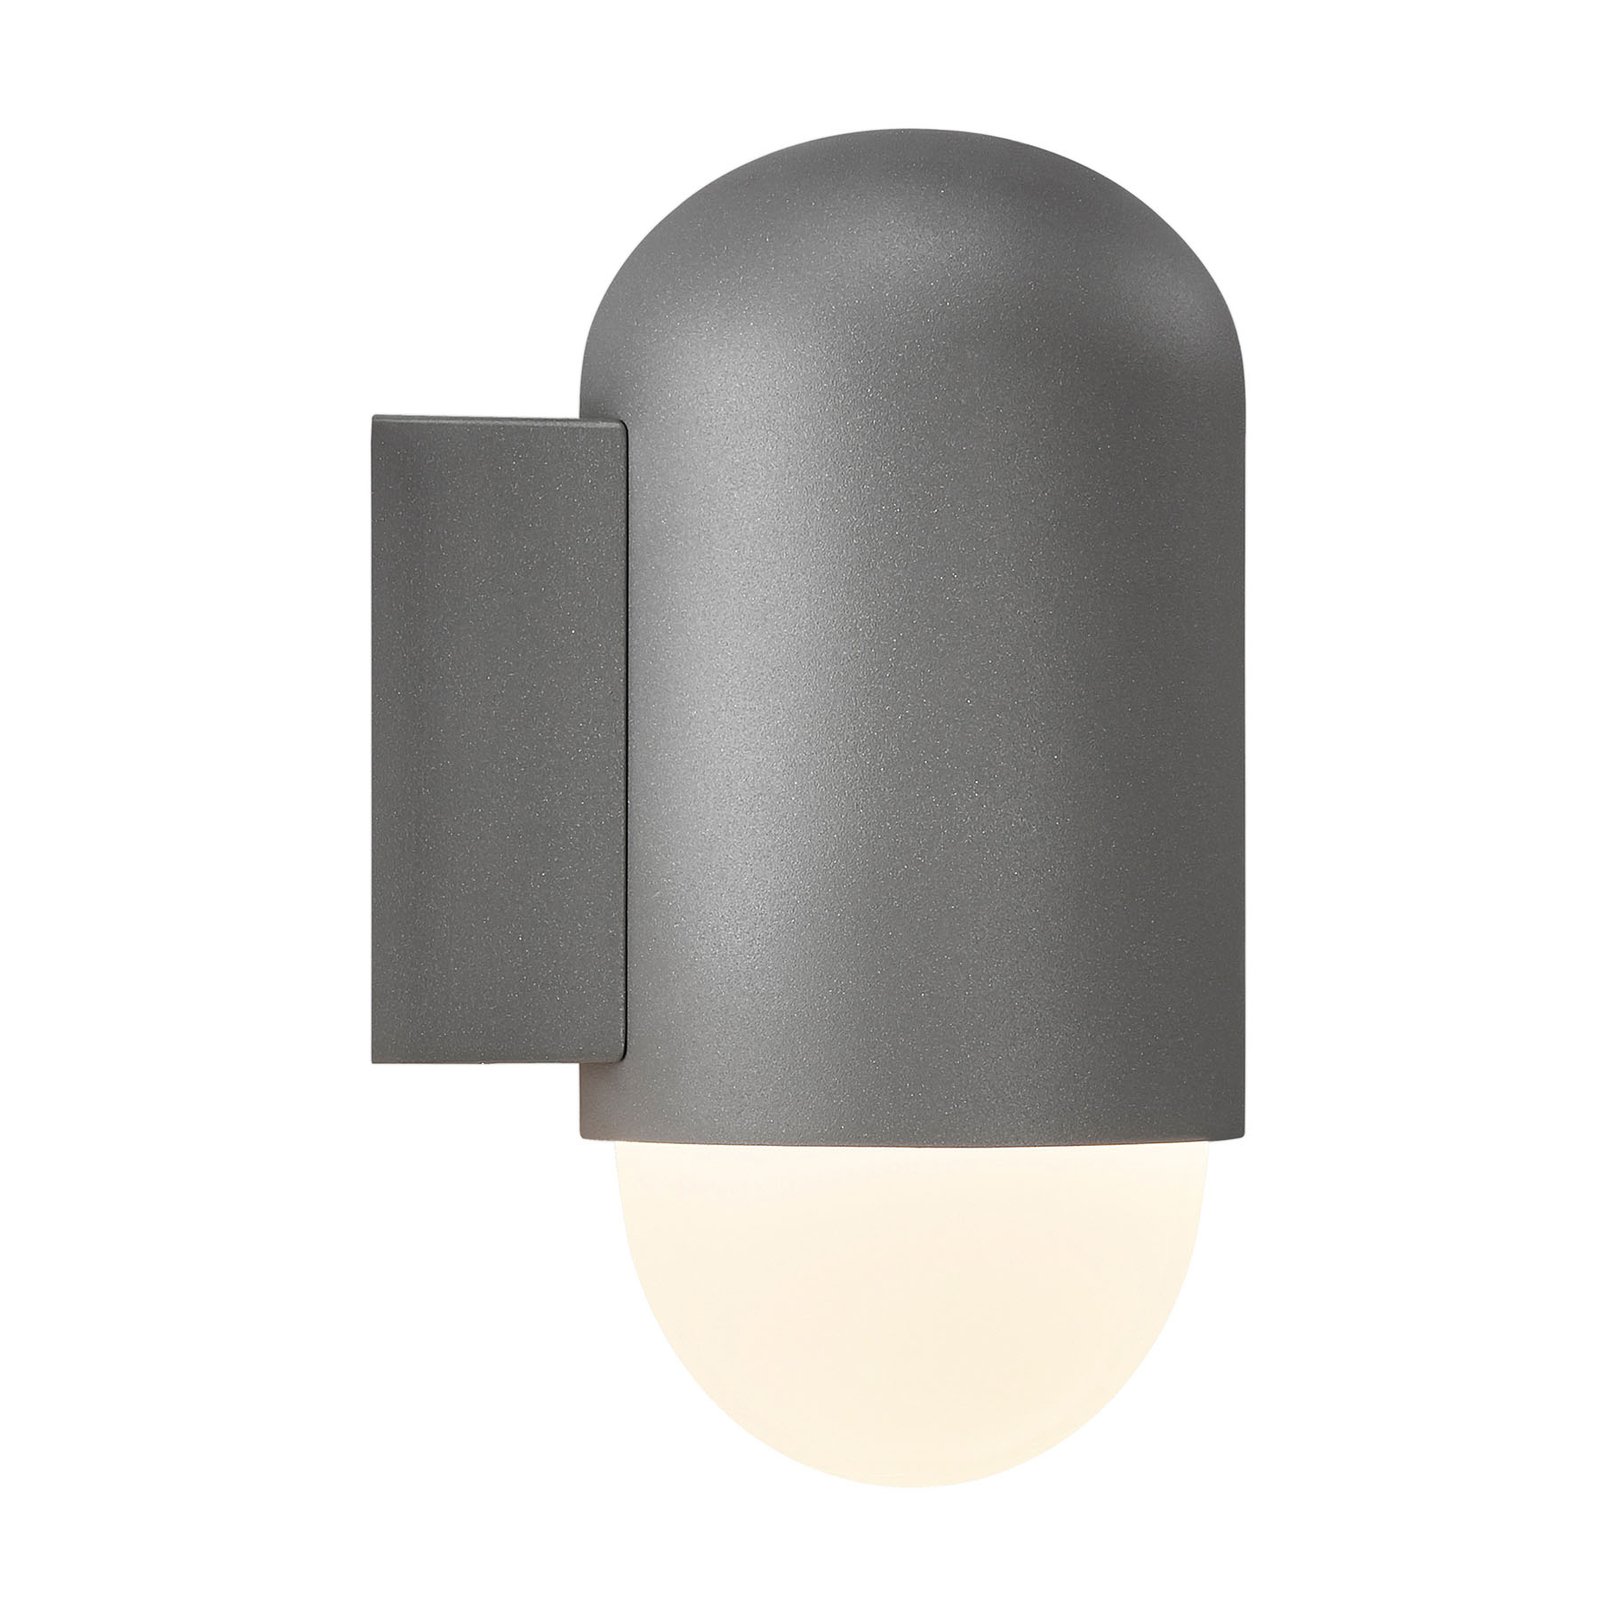 Outdoor wall lamp Heka, anthracite grey, aluminium, height 21.6 cm